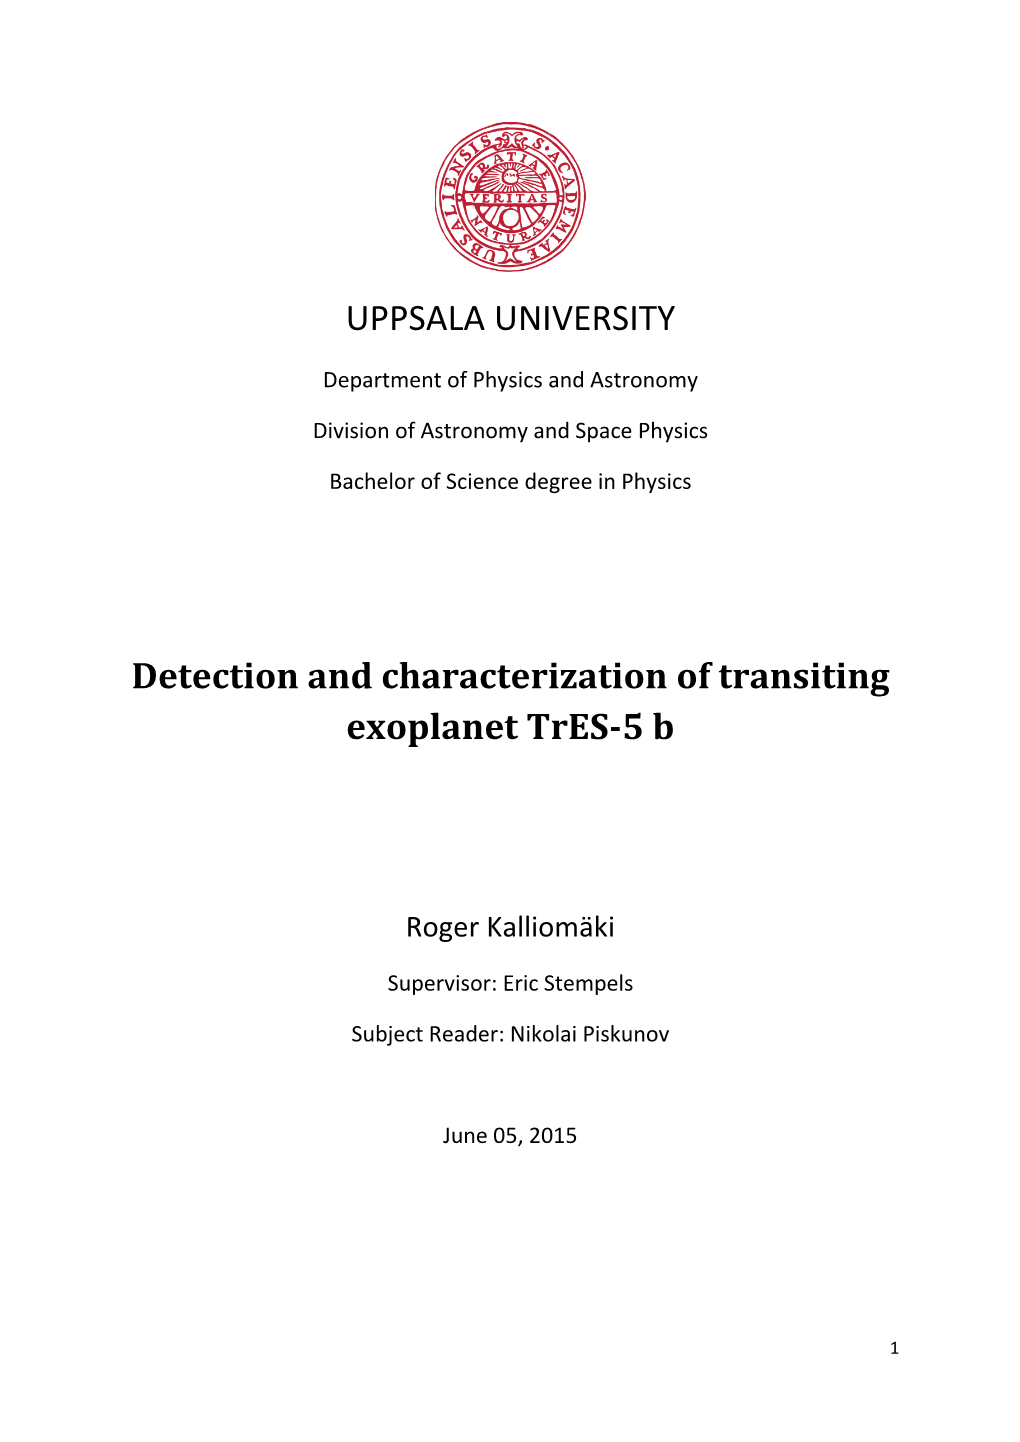 UPPSALA UNIVERSITY Detection and Characterization of Transiting